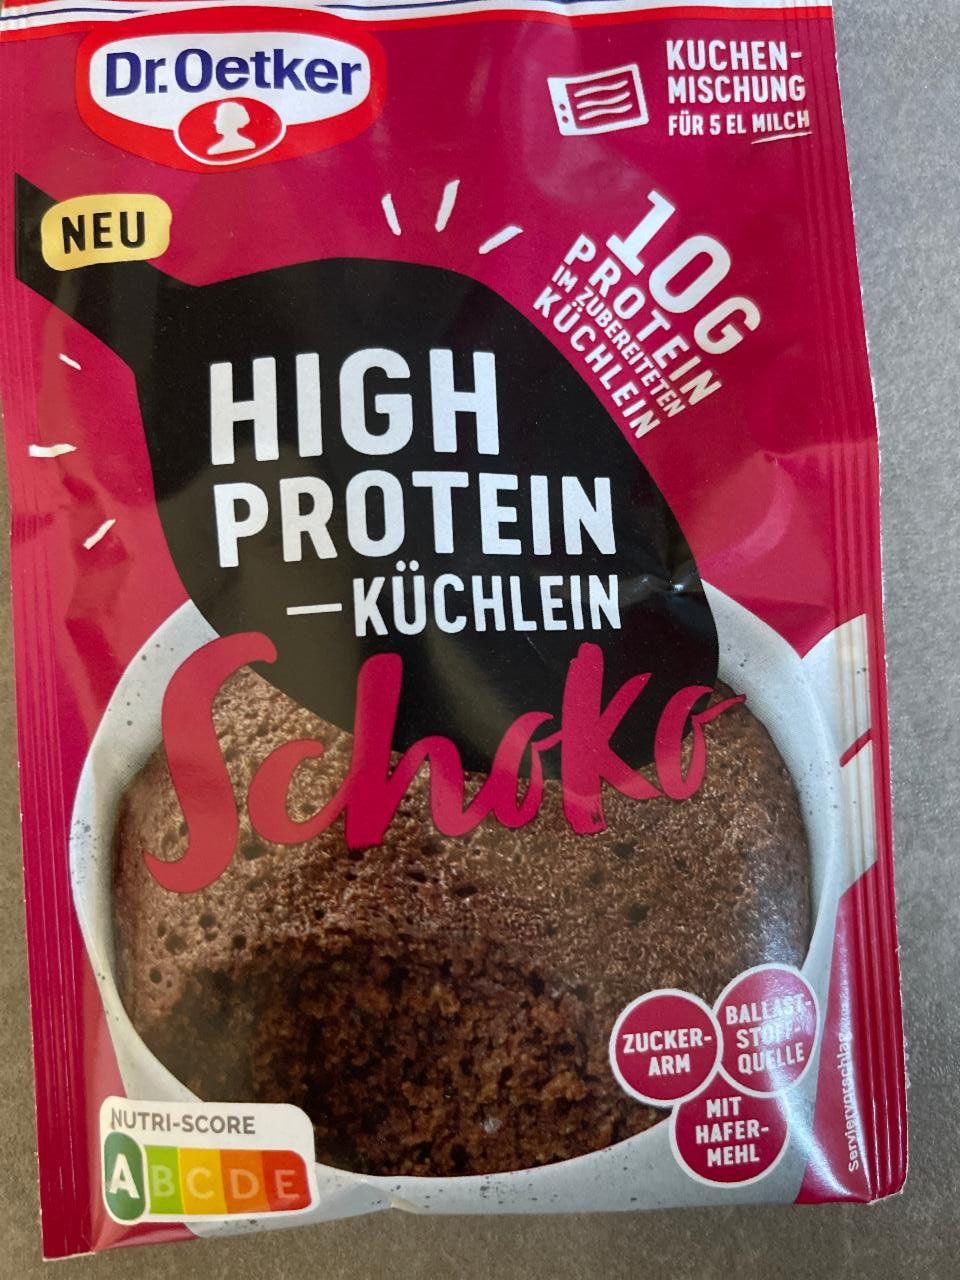 Фото - High protein Küchlein Dr.Oetker